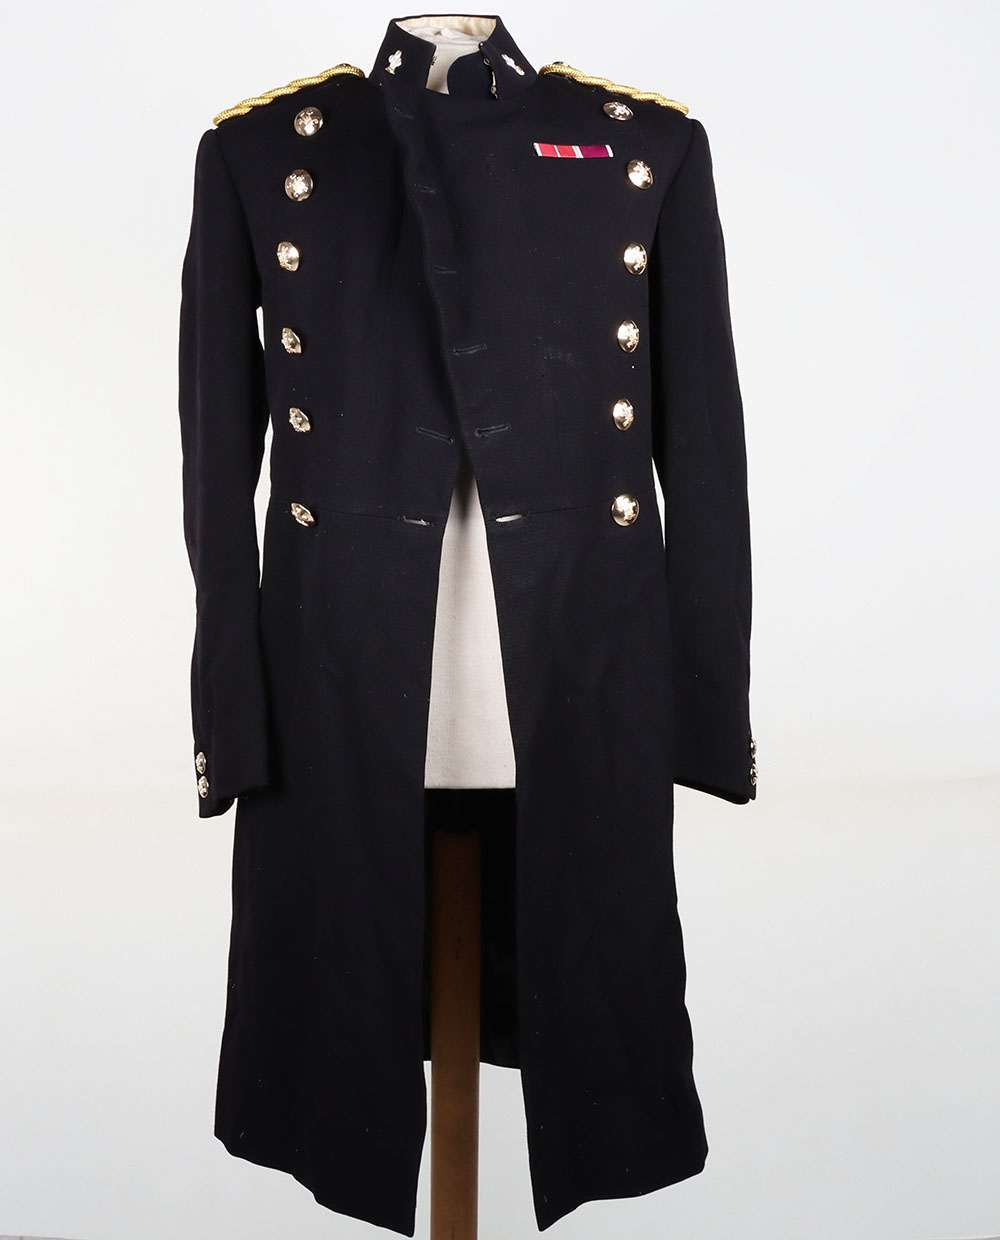 British Royal Hussars Officers Frock Coat - Image 2 of 11